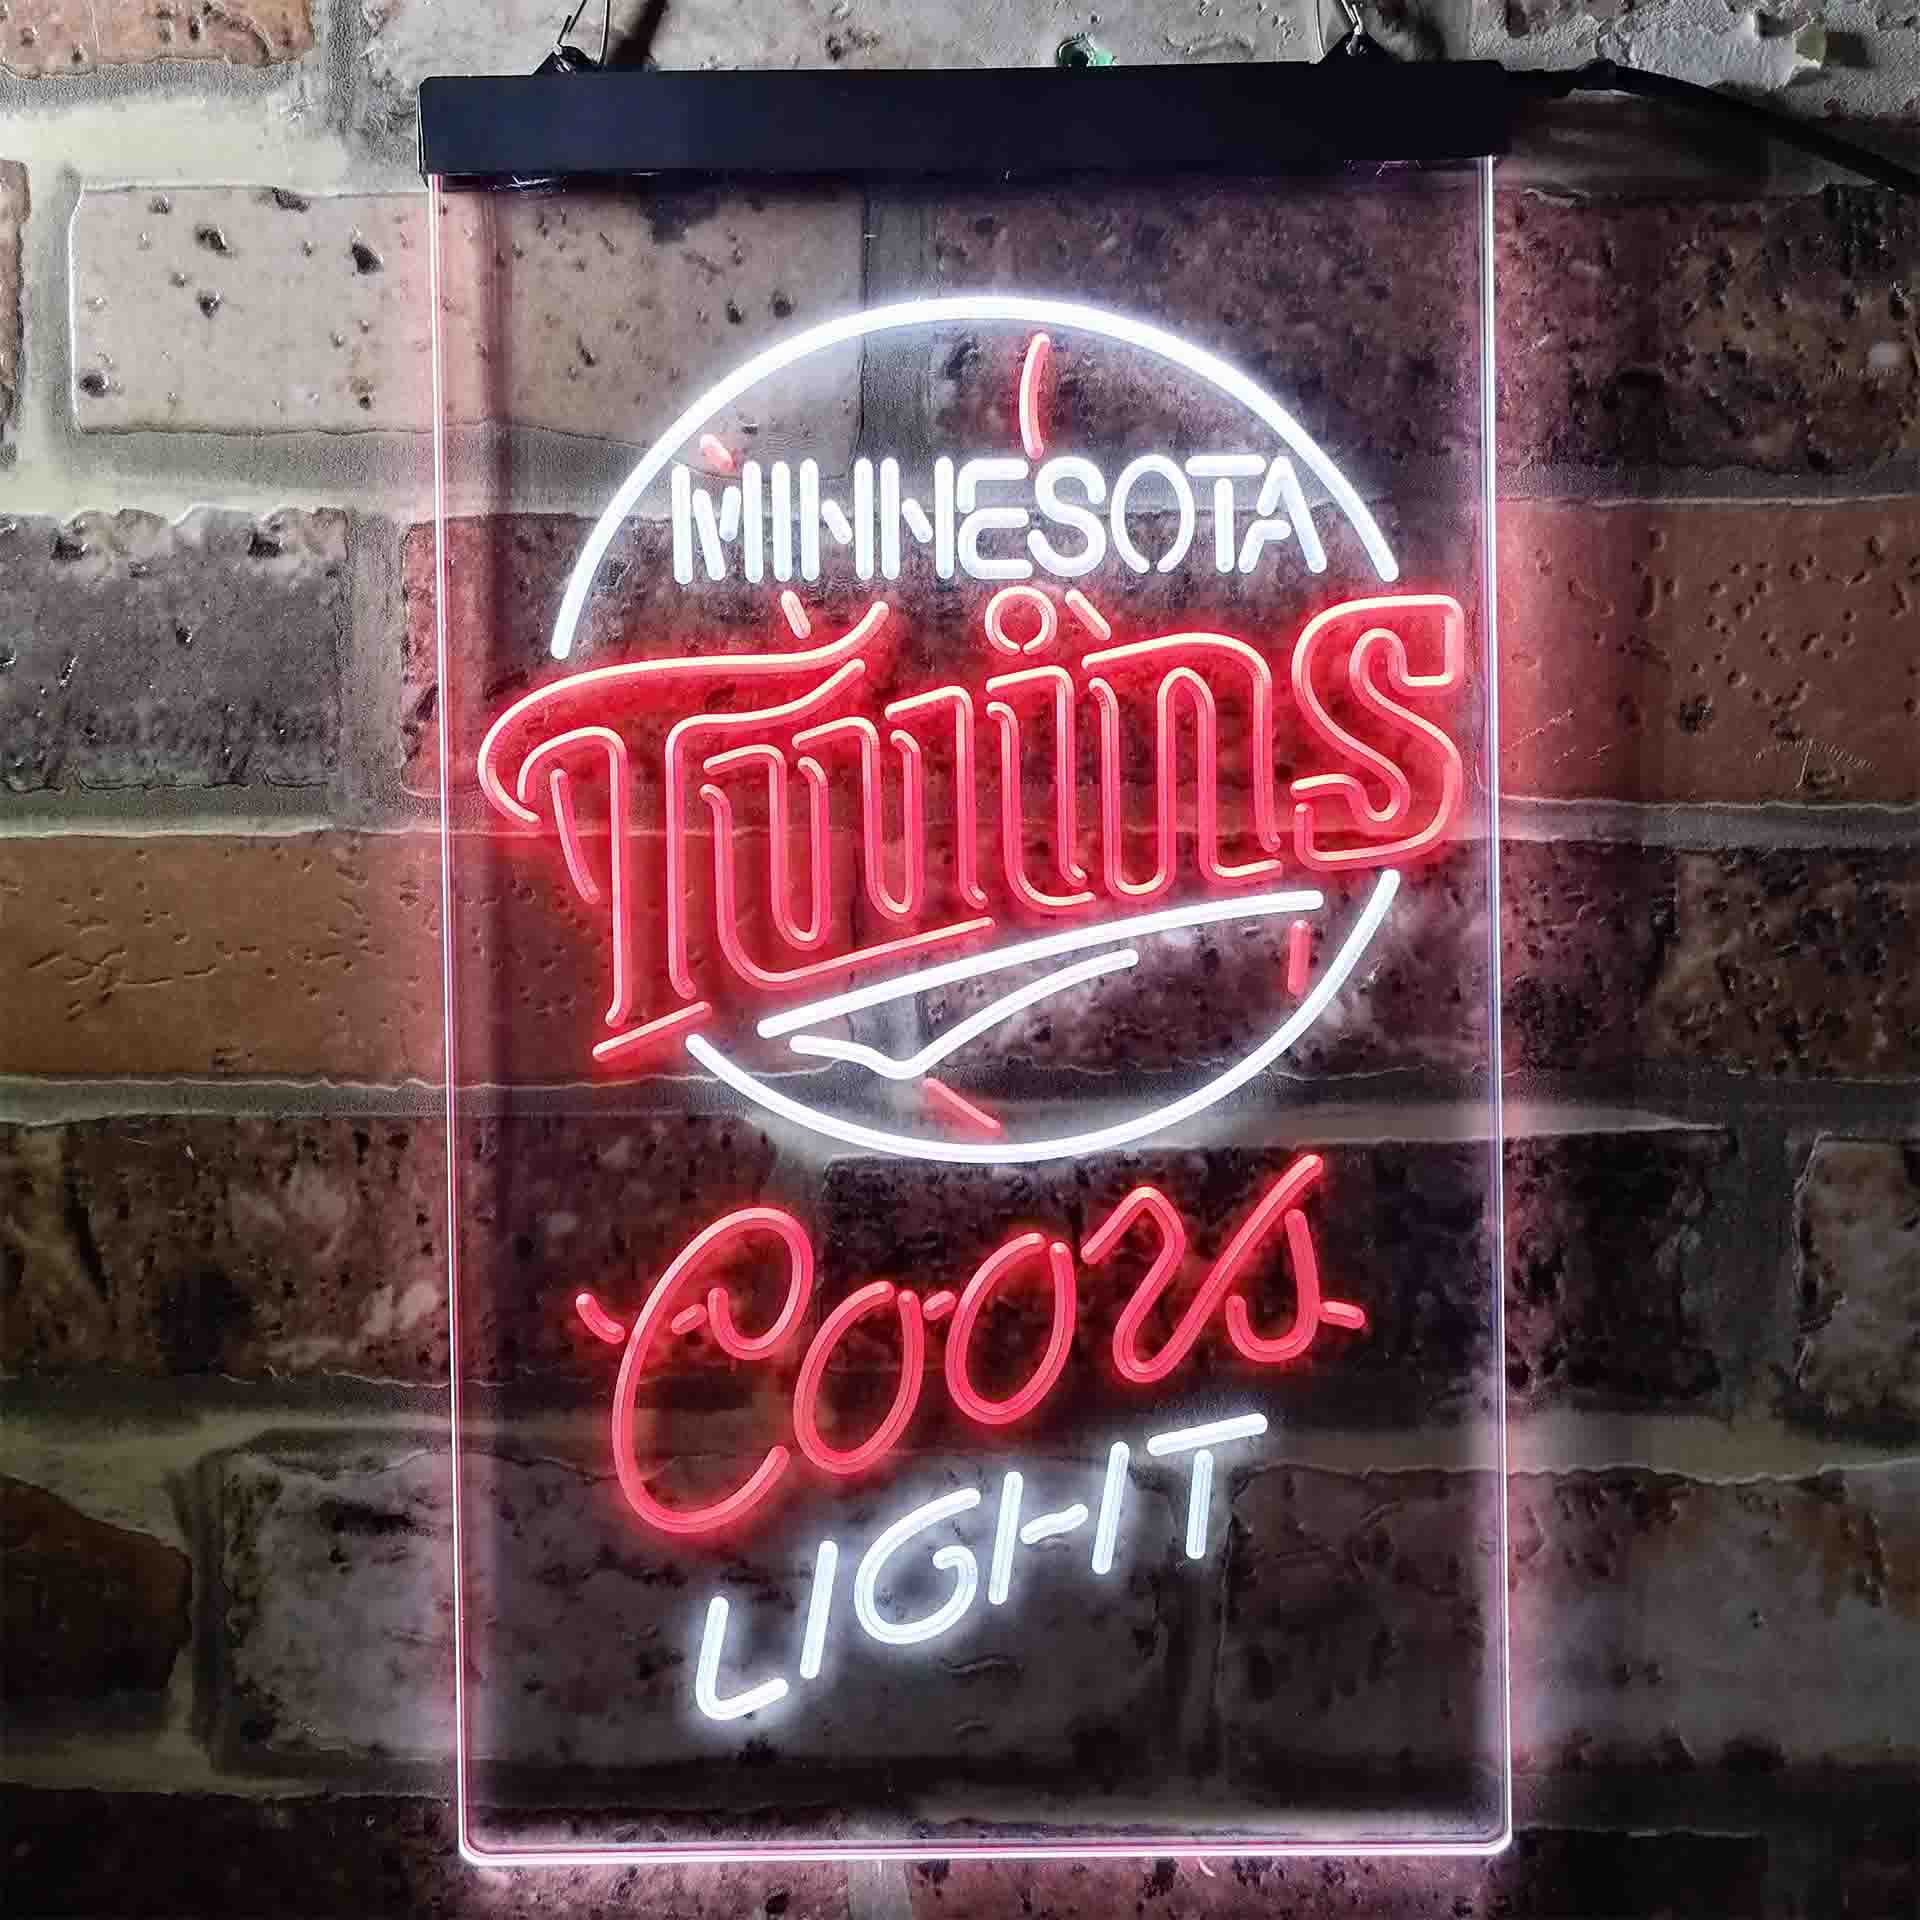 Minnesota Twins Coors Light Neon LED Sign